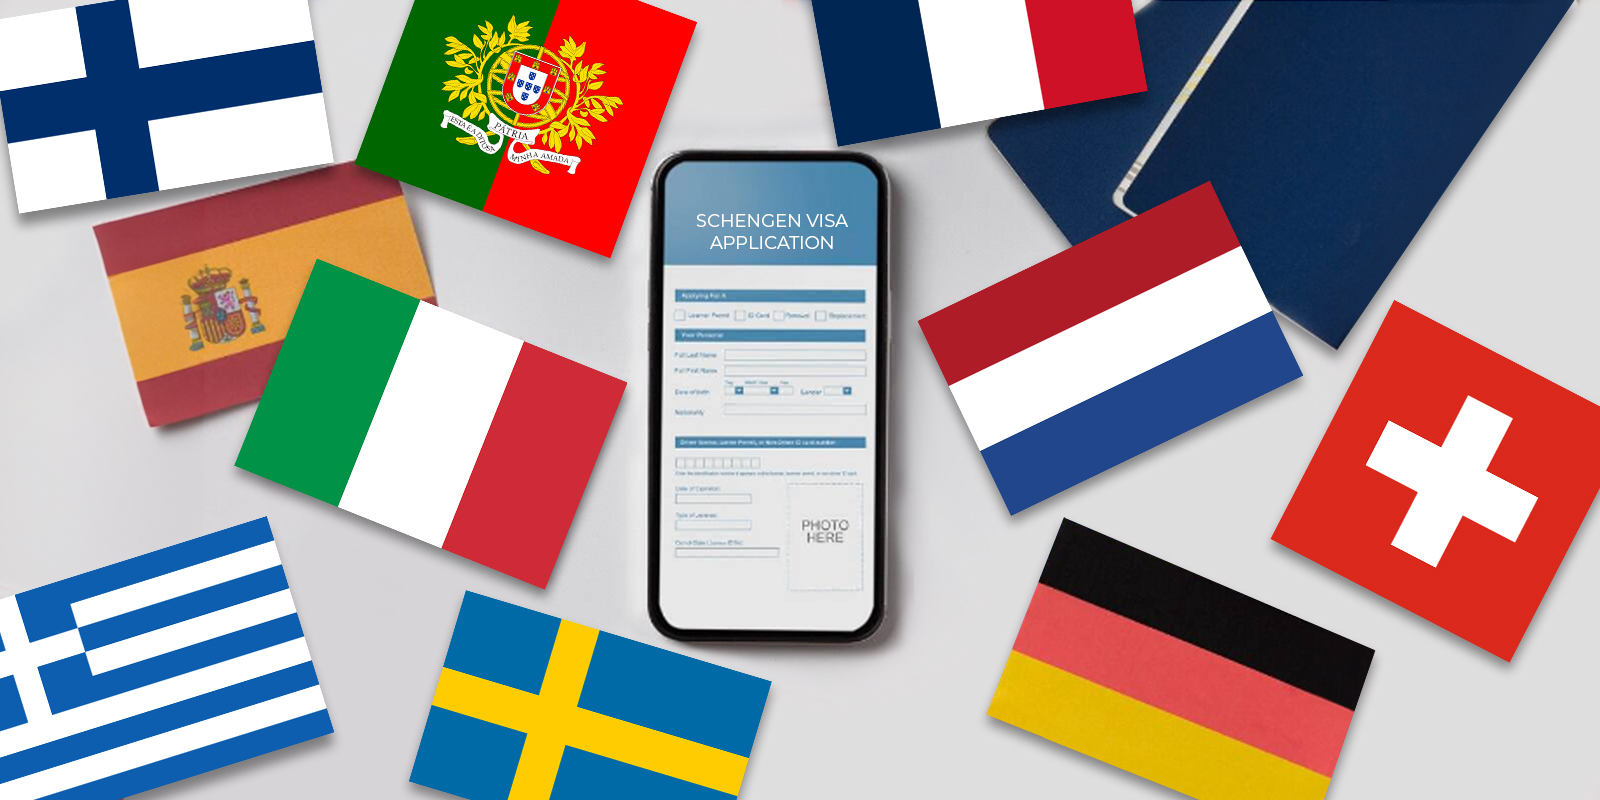 digital schengen visa form on mobile phone